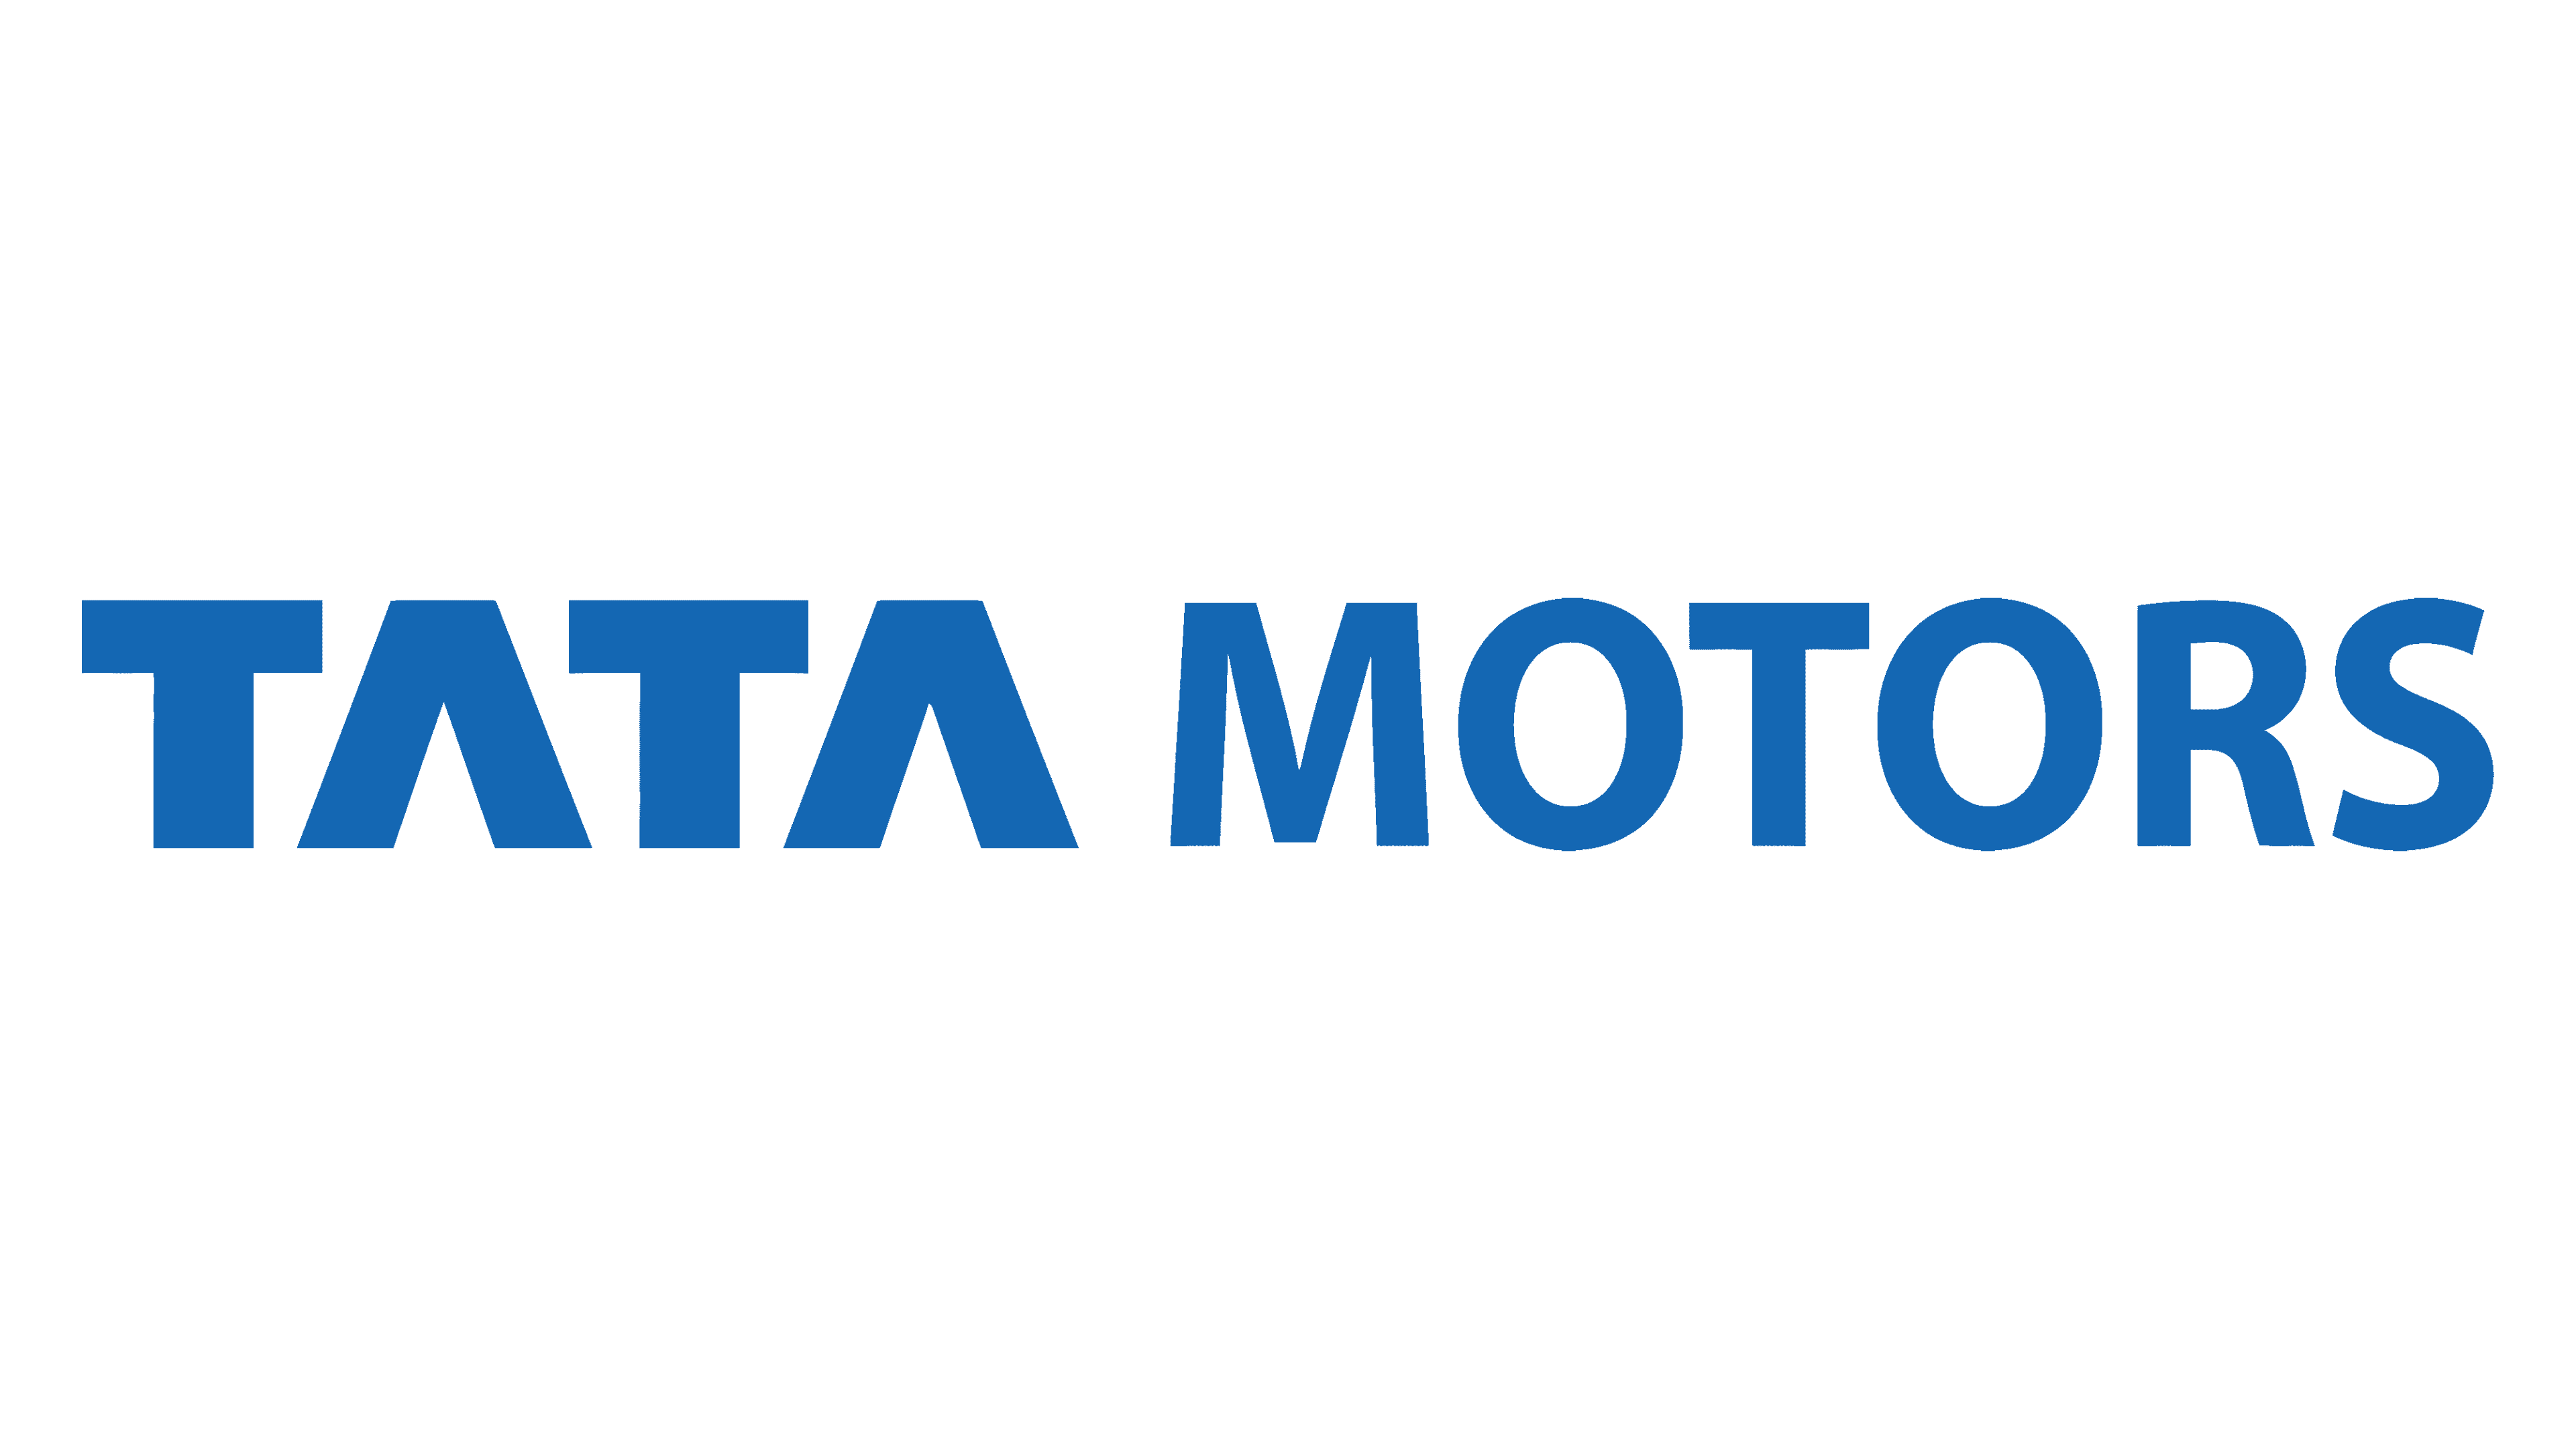 Do You Know “Sir Ratanji Tata” & “Ratan N Tata” are two different  personalities? | Car logos, Tata, Car symbols